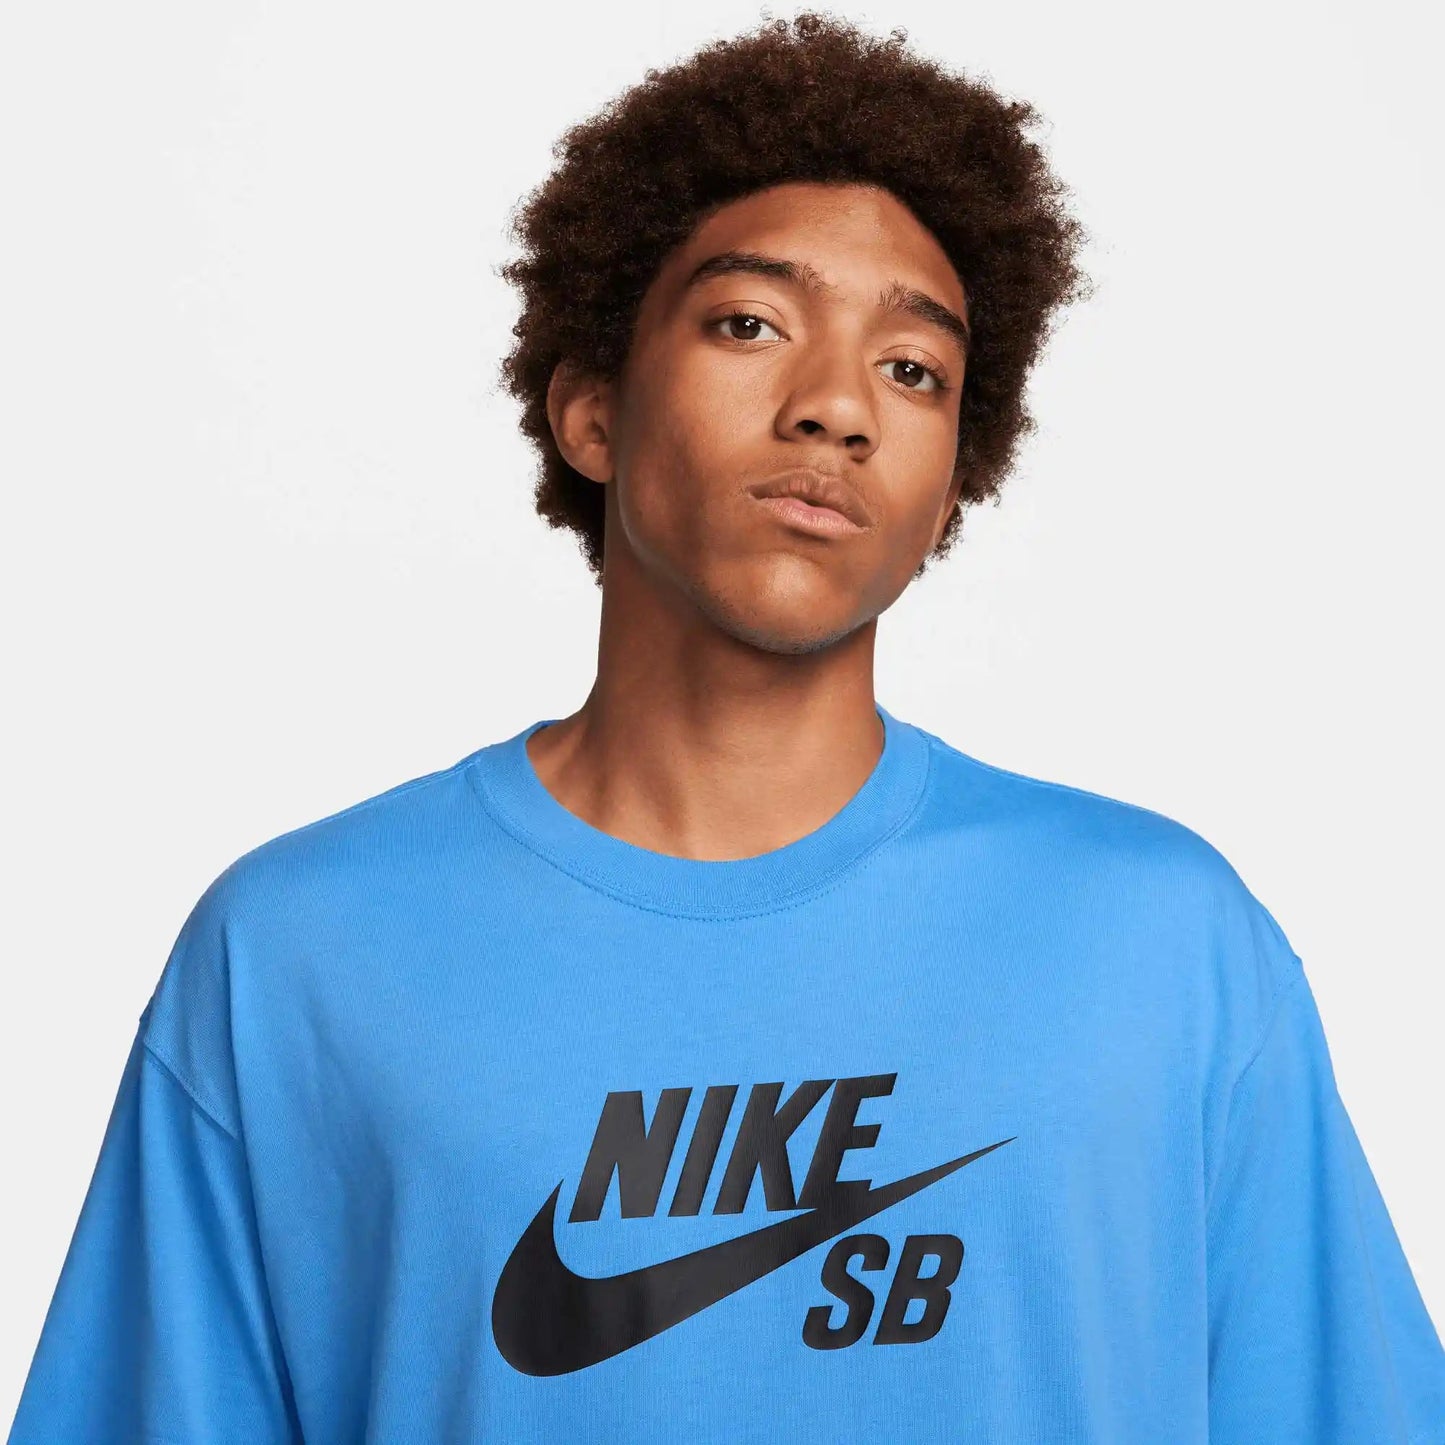 Nike SB Logo Skate T-Shirt, university blue/black - Tiki Room Skateboards - 2